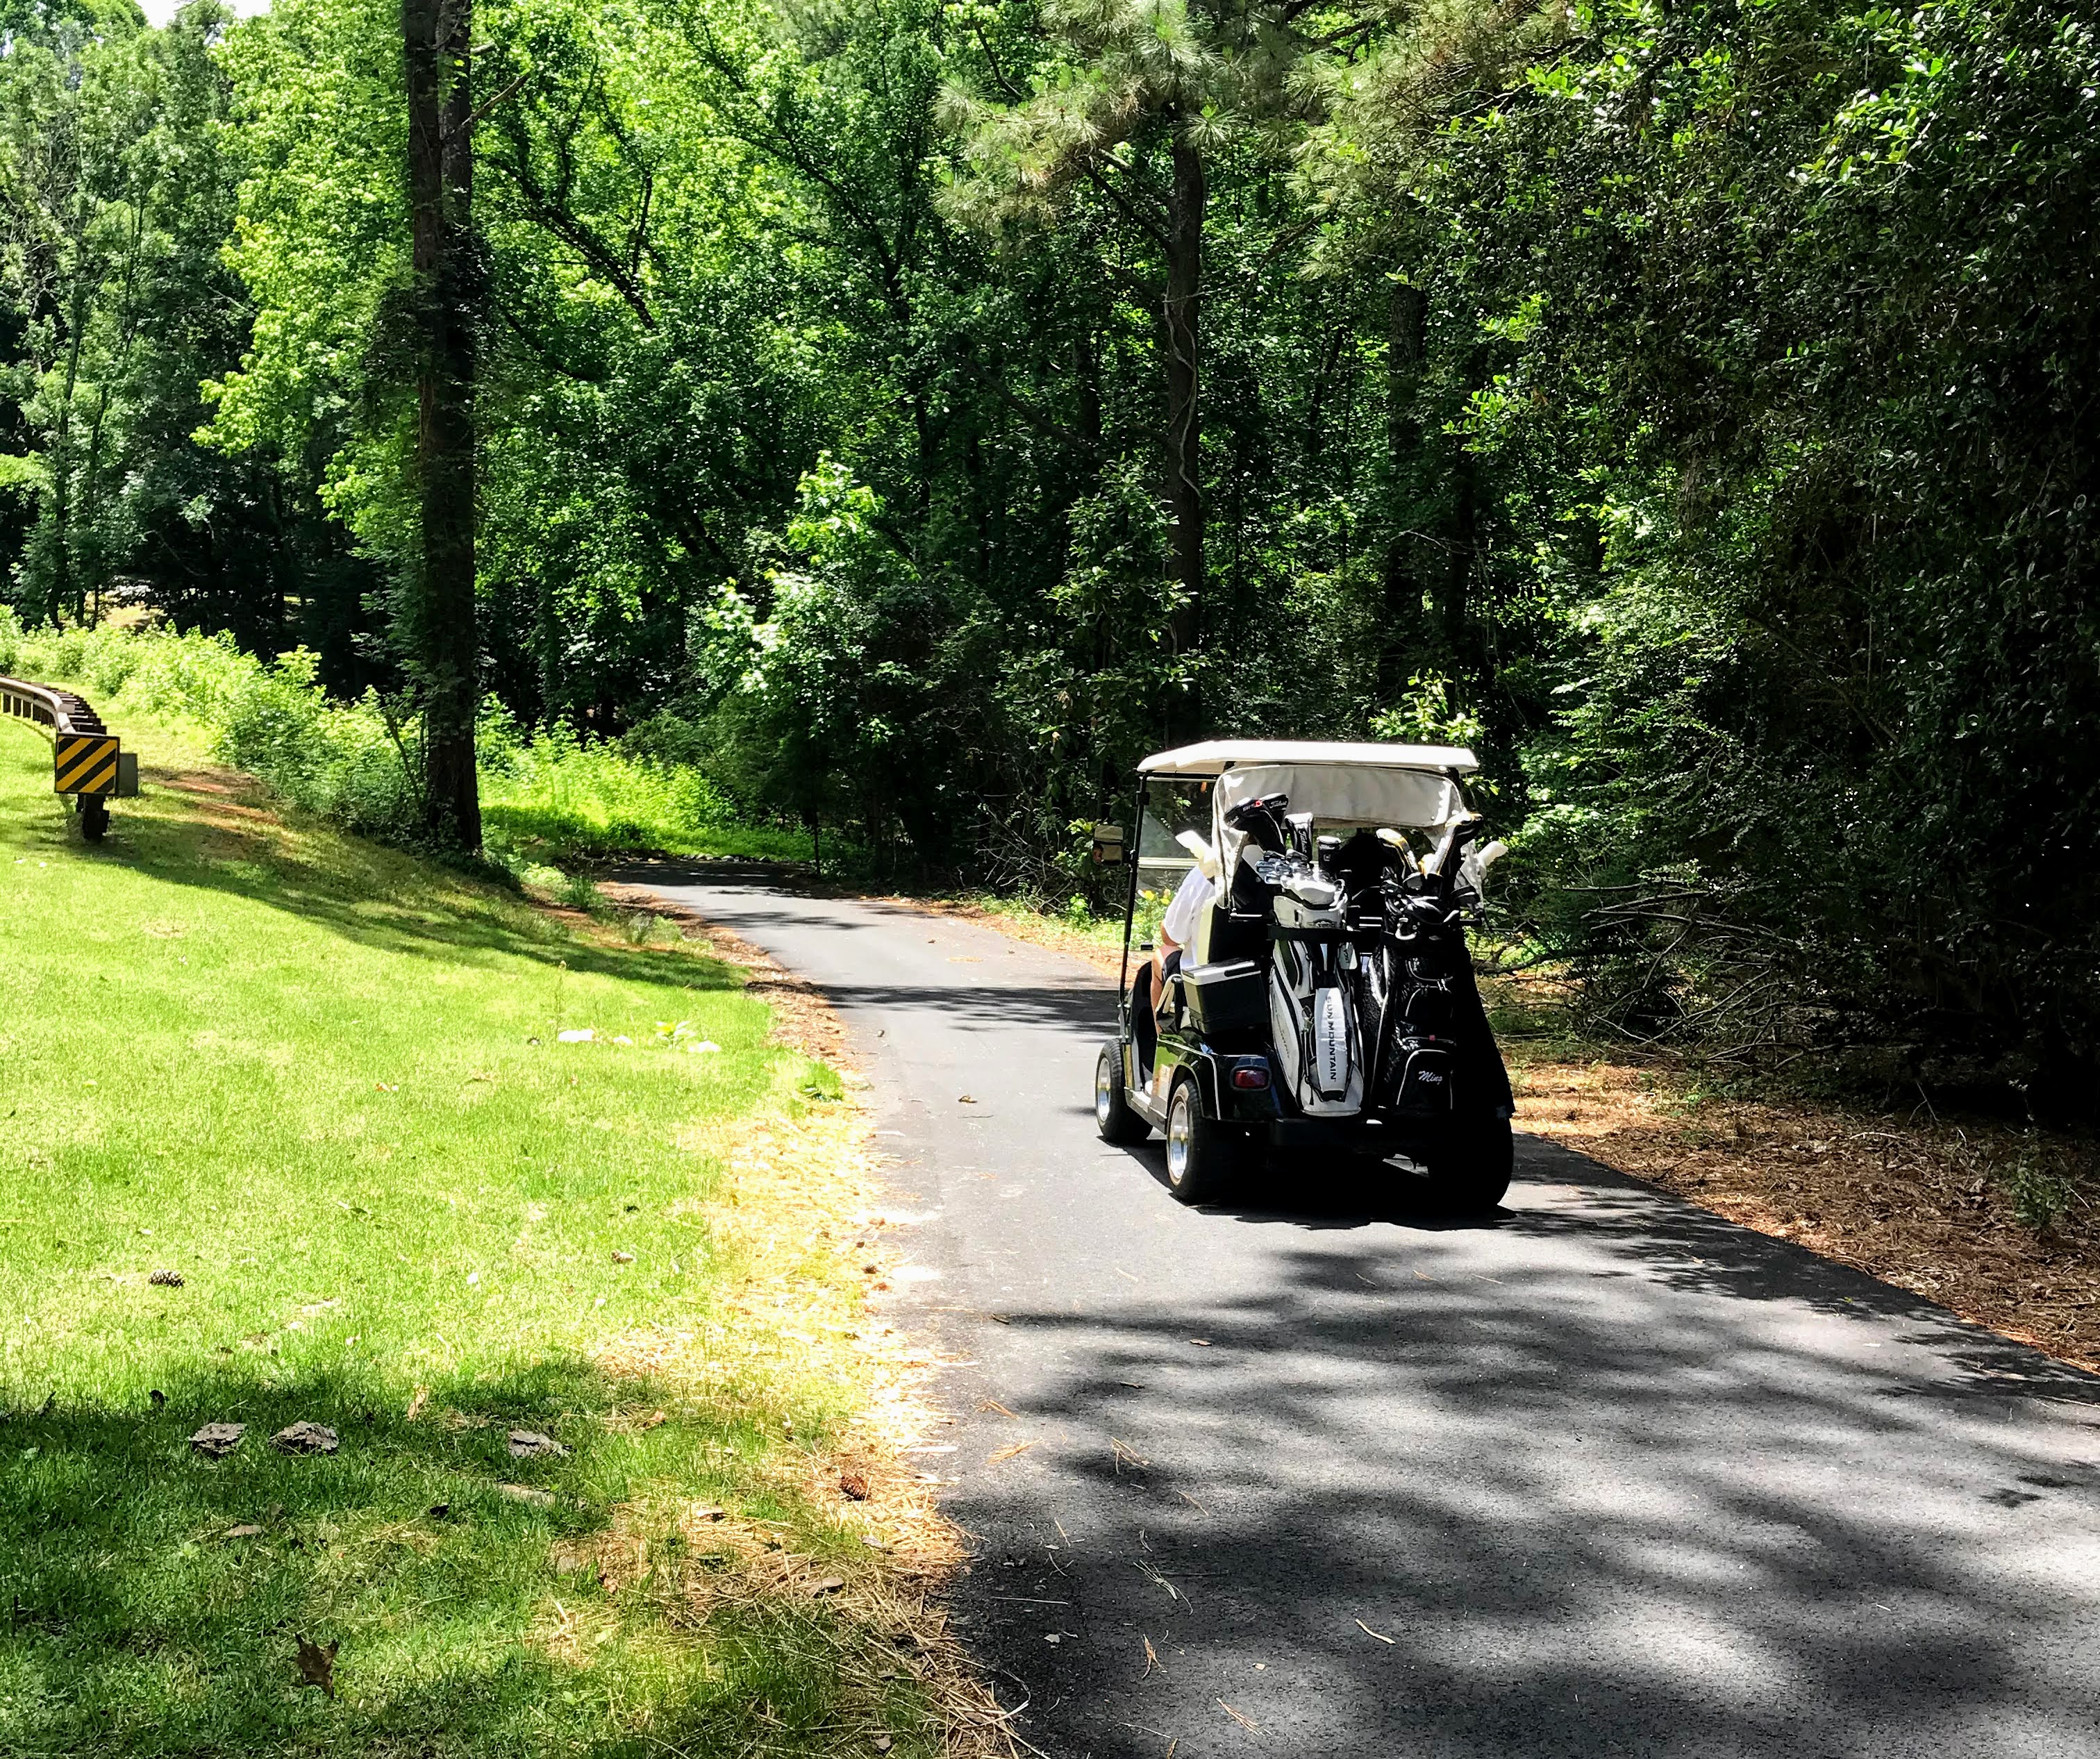 Peachtree City, Georgia - My Favorite Golf Cart Community. Here's Why